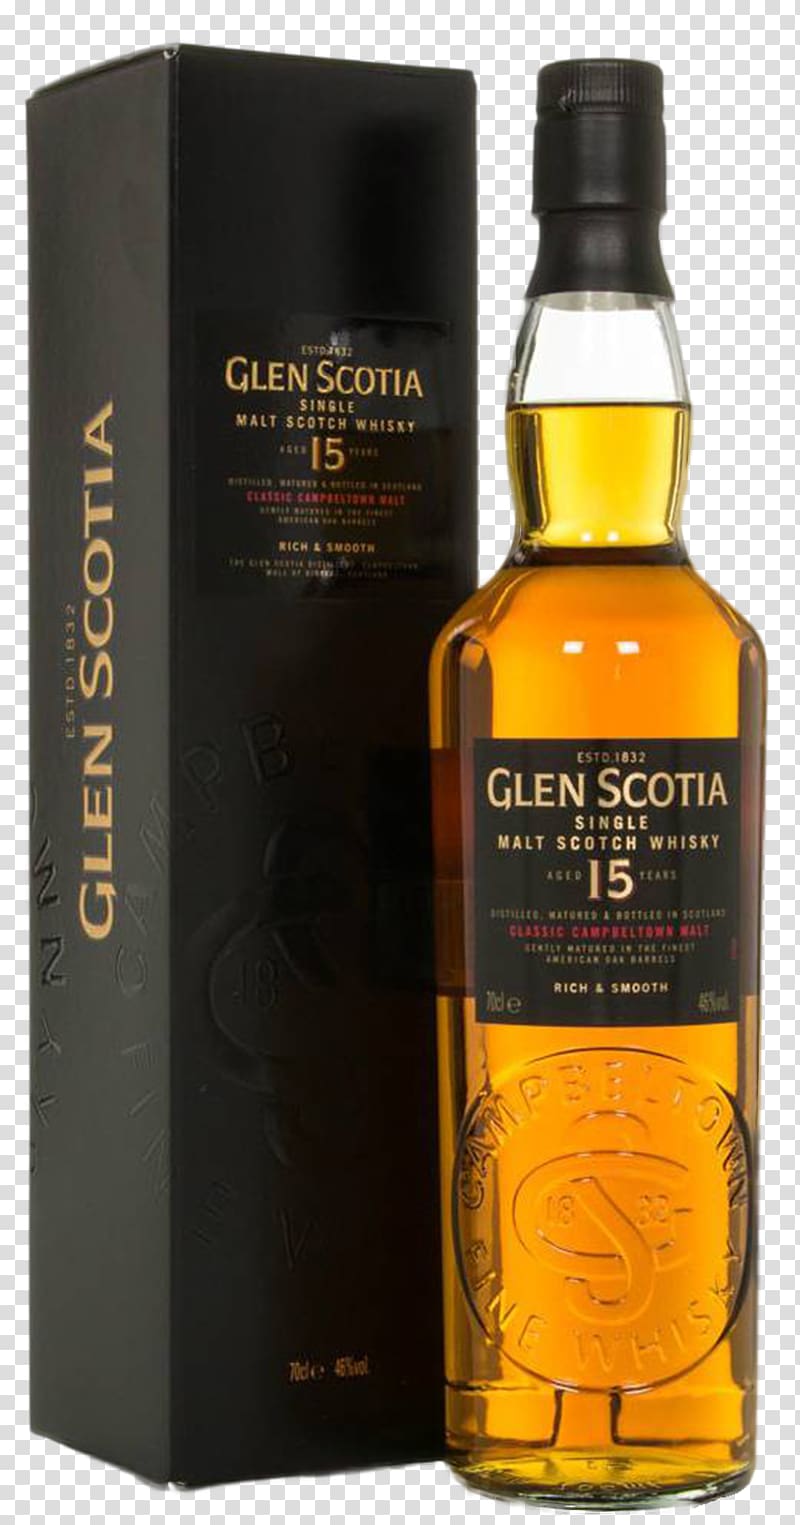 Single malt whisky Glen Scotia distillery Scotch whisky Whiskey Dalmore distillery, Glen Ord Distillery transparent background PNG clipart